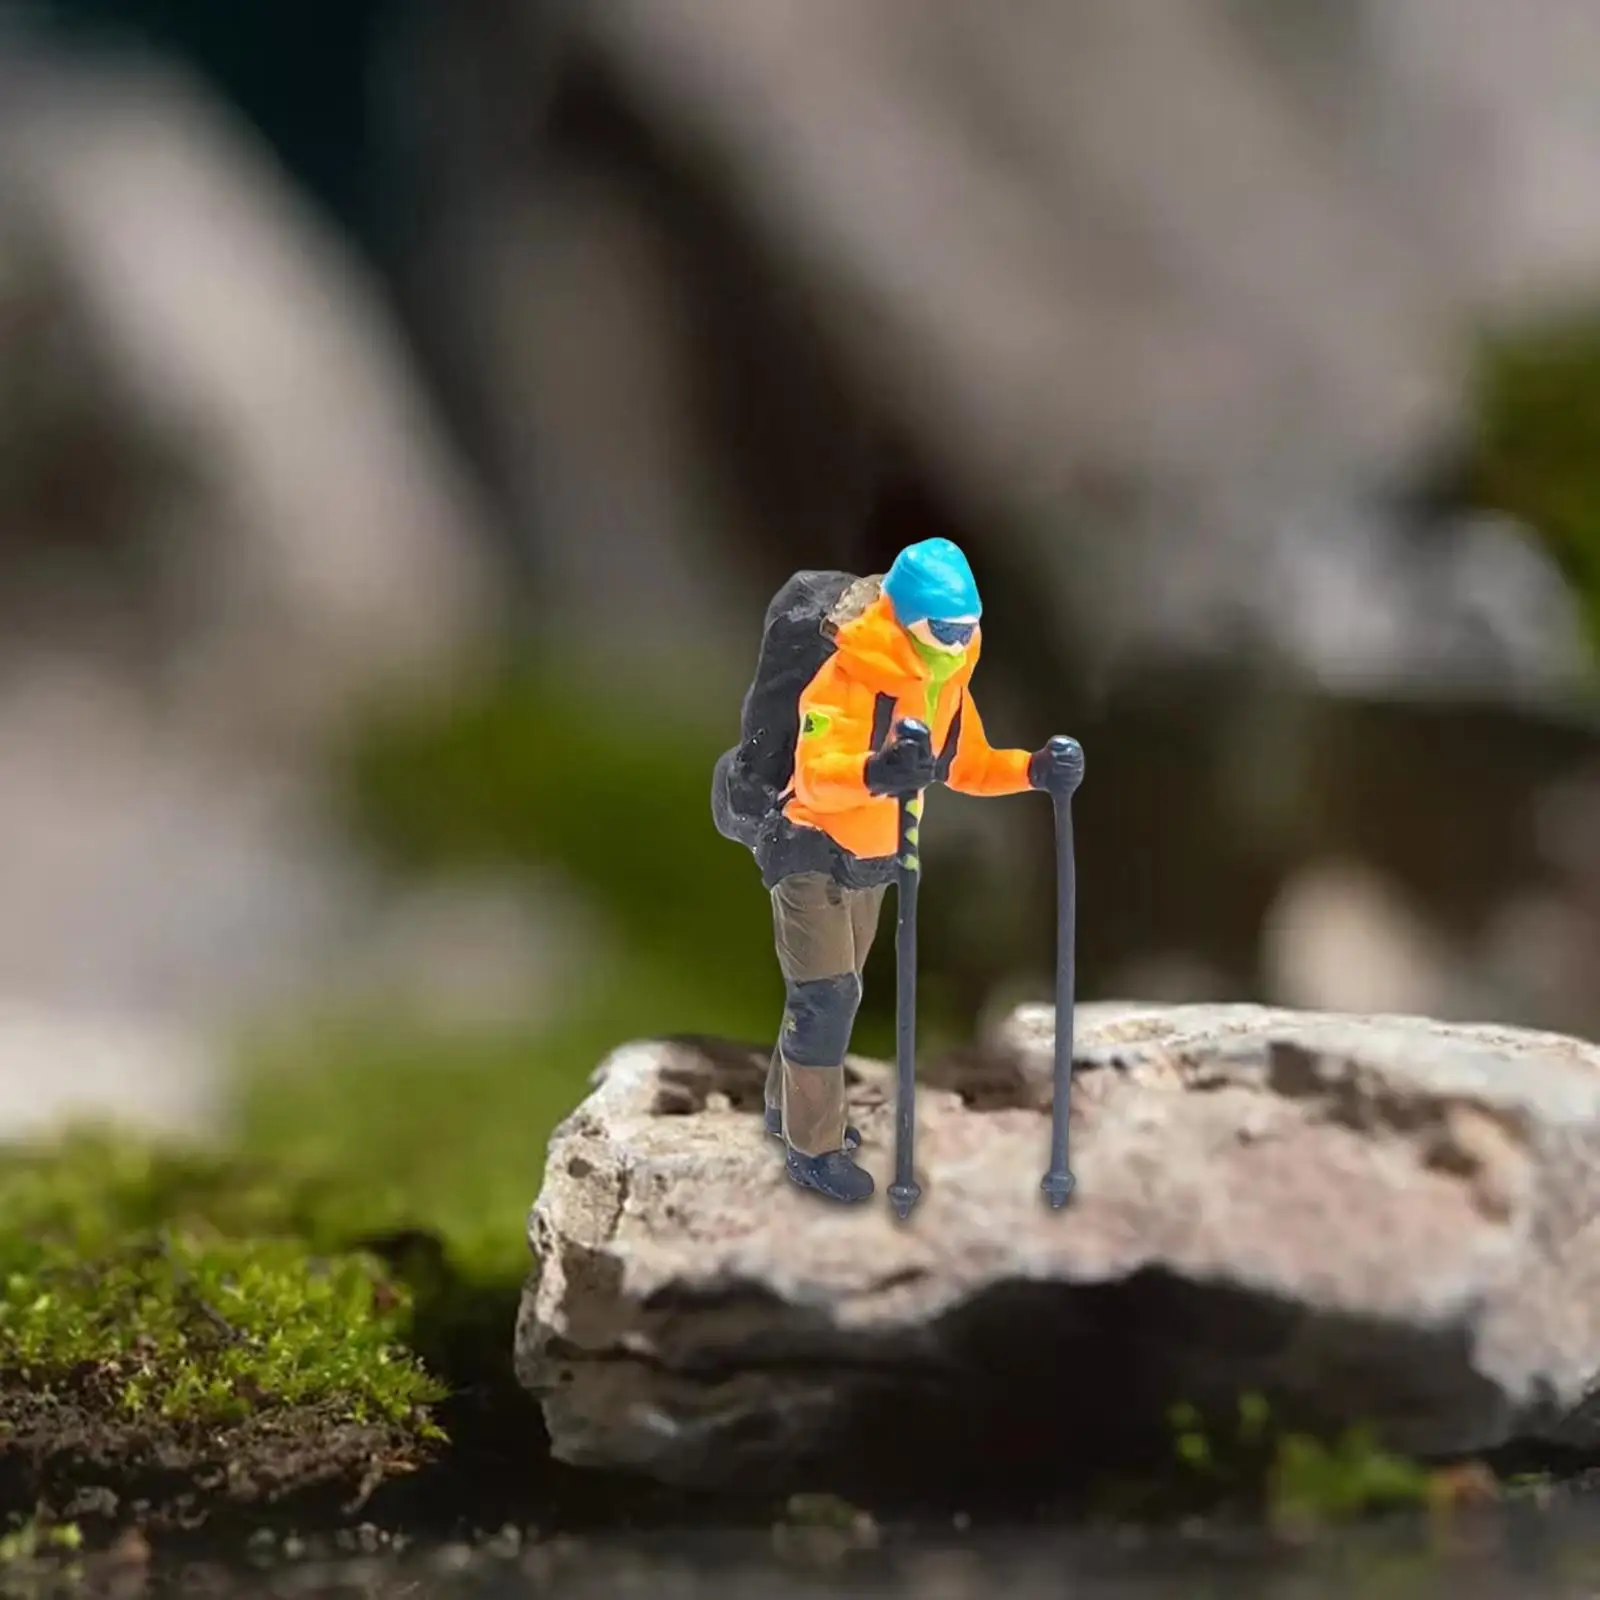 1/64 Climbing People Figures Miniature People Model for DIY Scene Layout